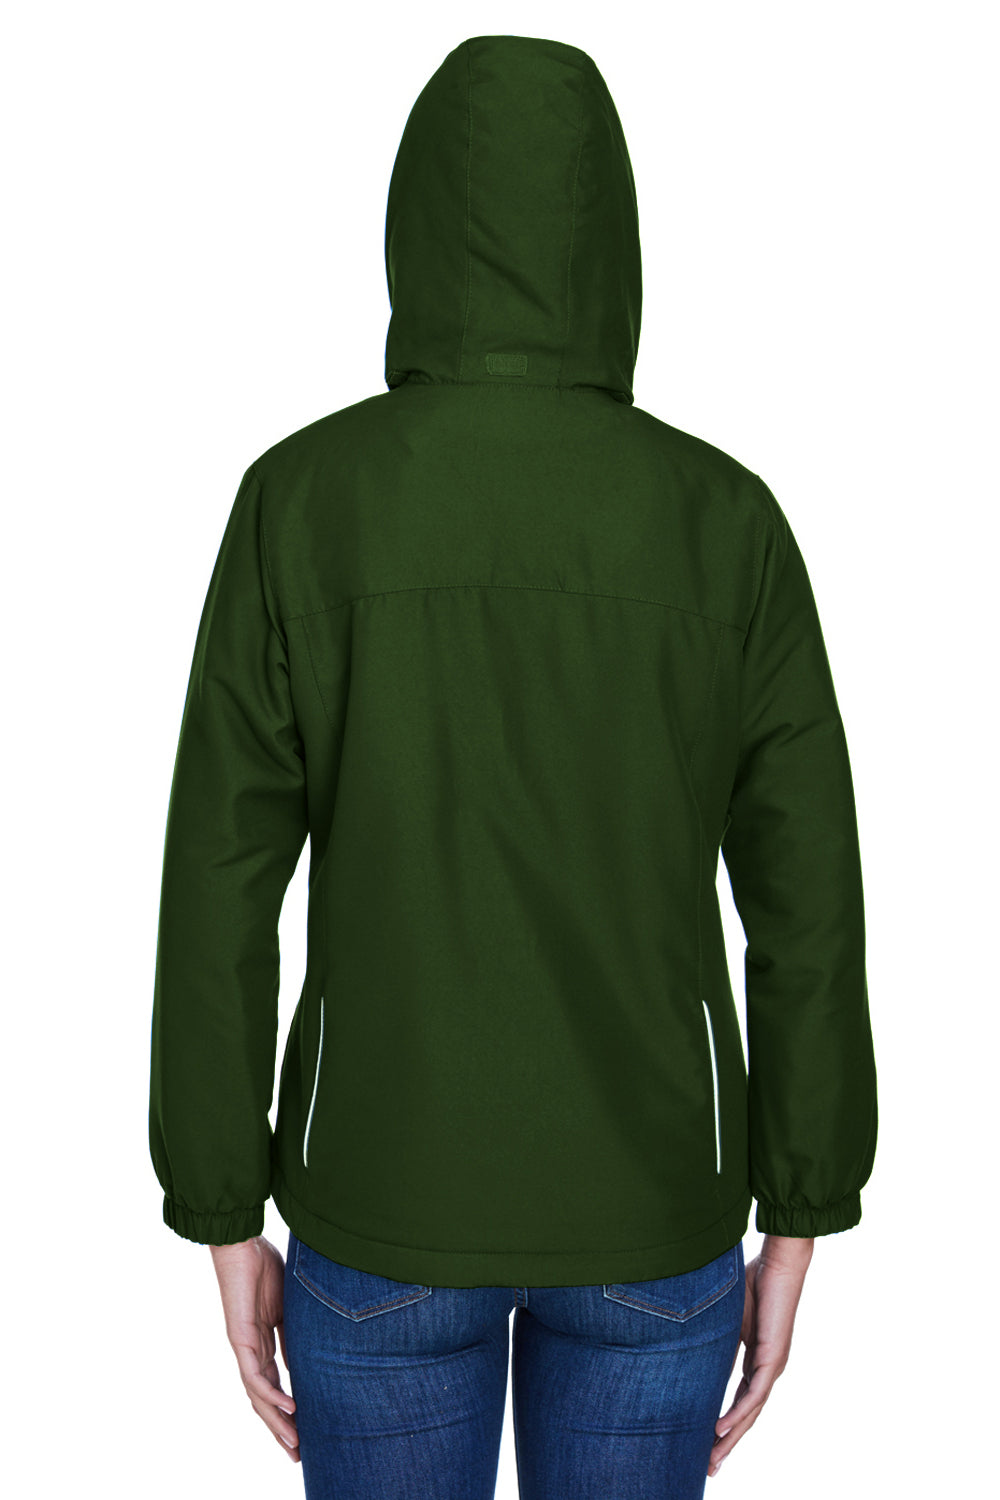 Core 365 78189 Womens Brisk Full Zip Hooded Jacket Forest Green Back